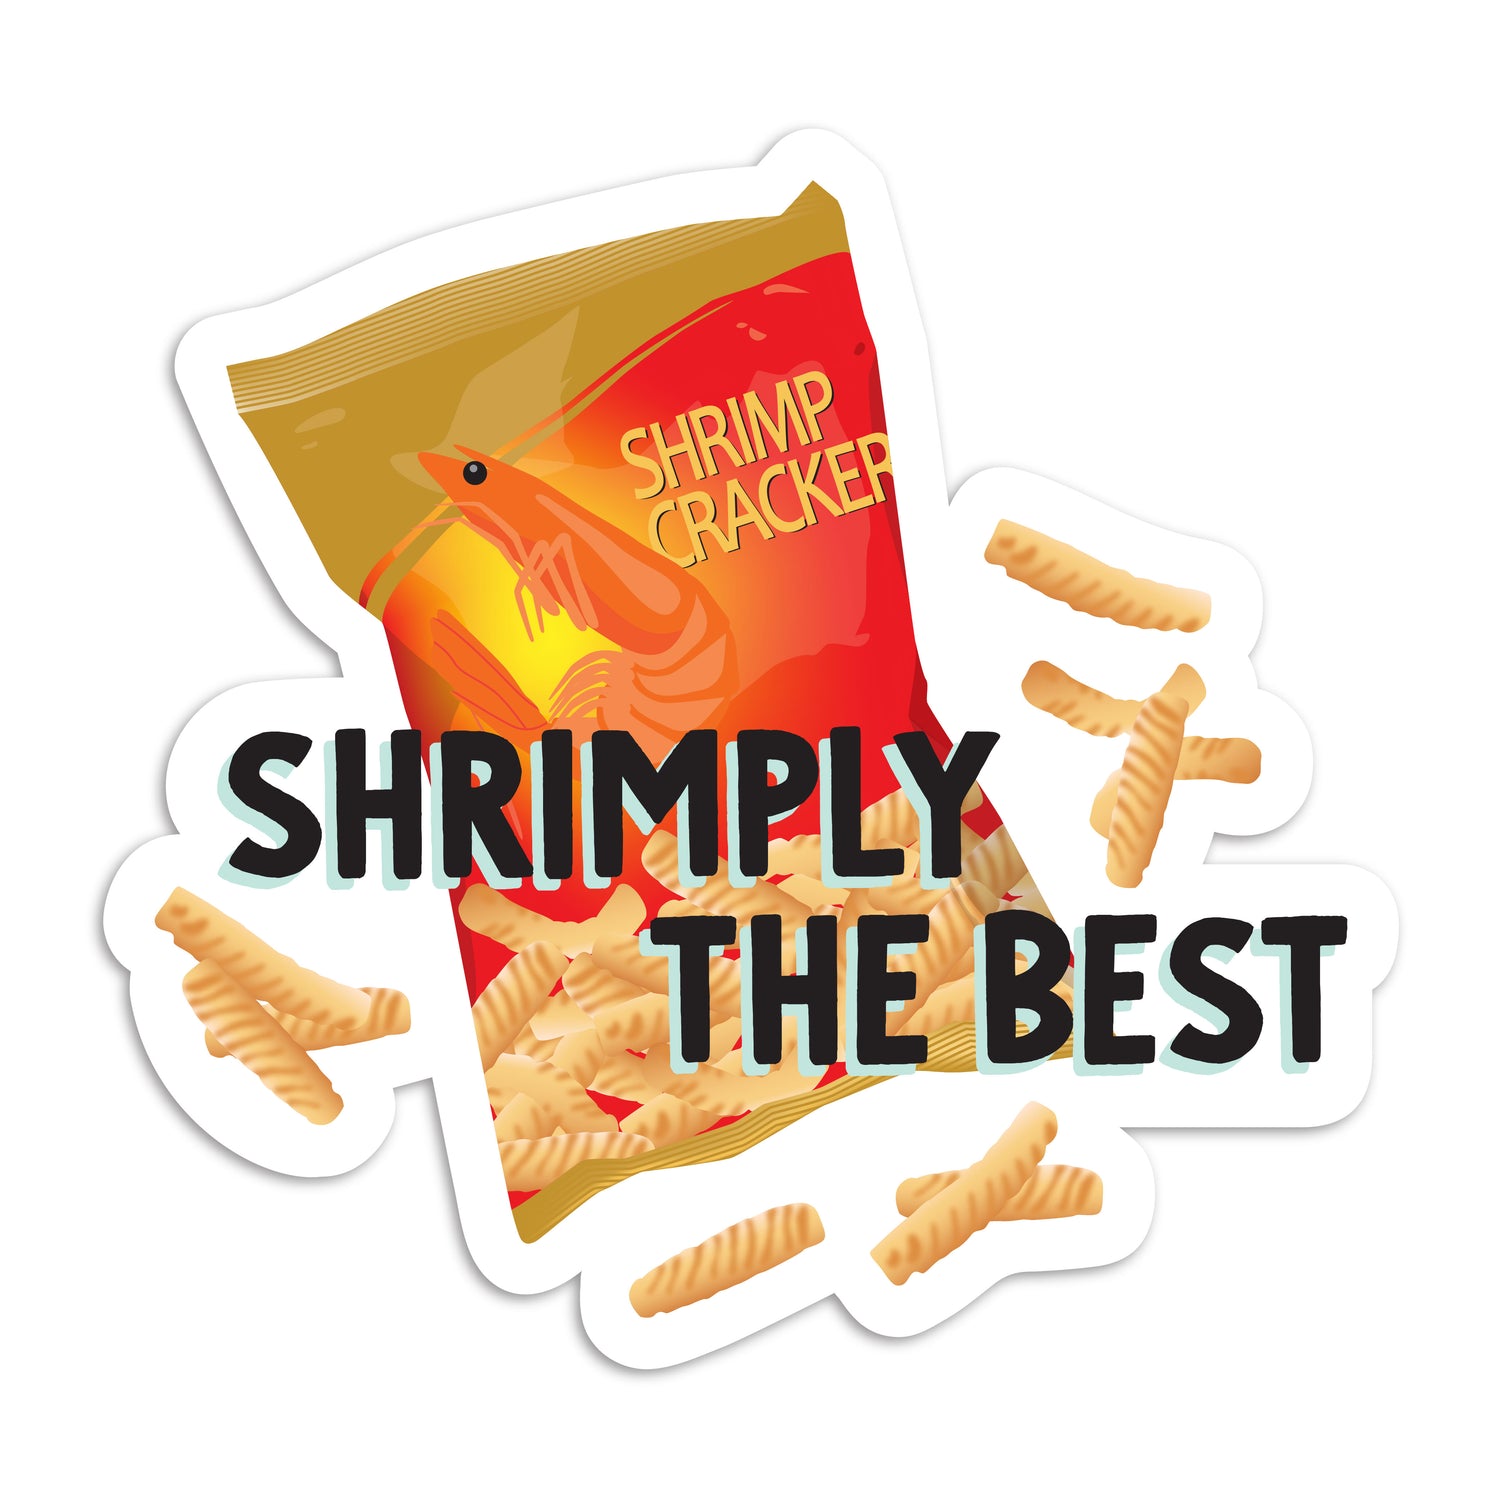 Shrimply the best shrimp chip vinyl sticker by I&